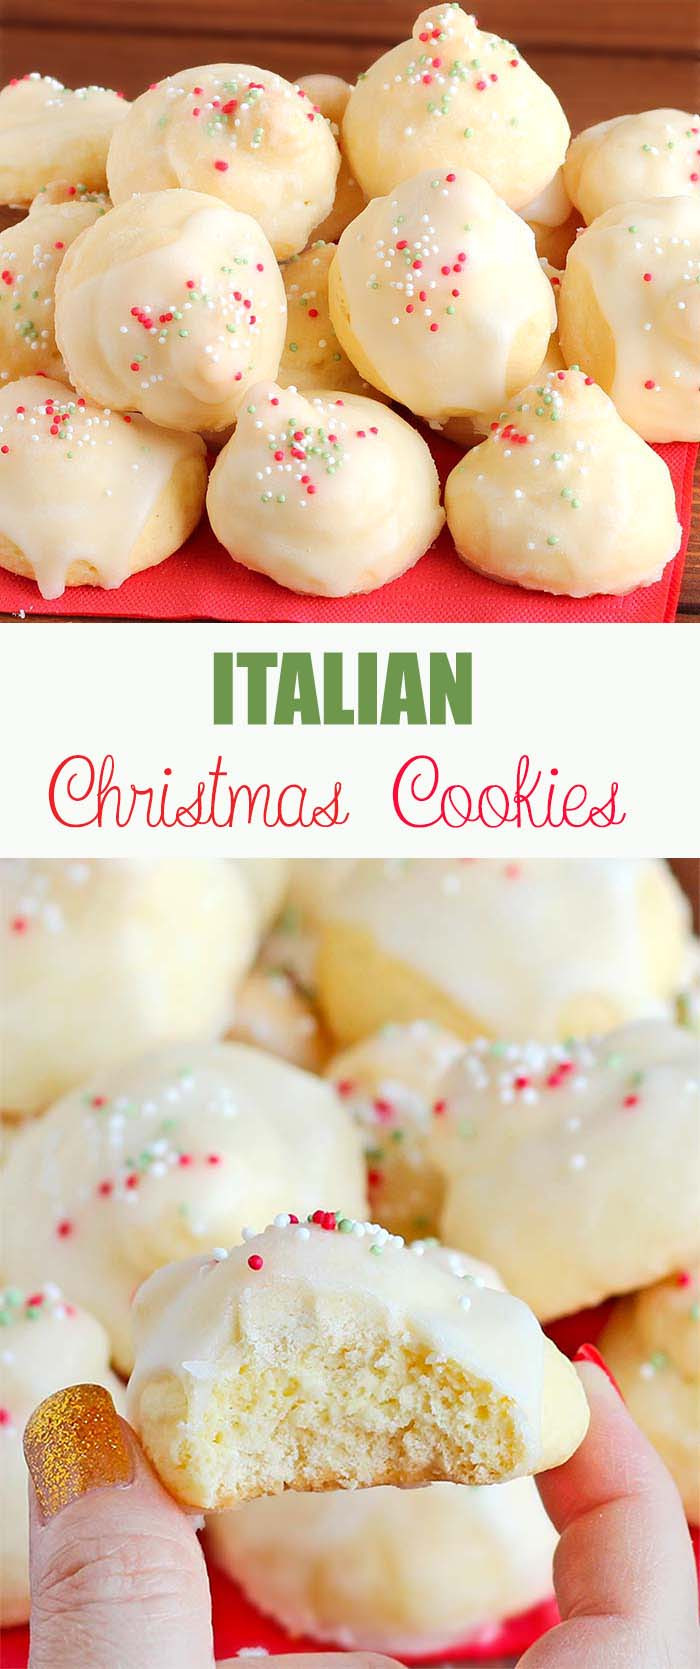 Christmas Italian Cookies
 Italian Christmas Cookies Cakescottage